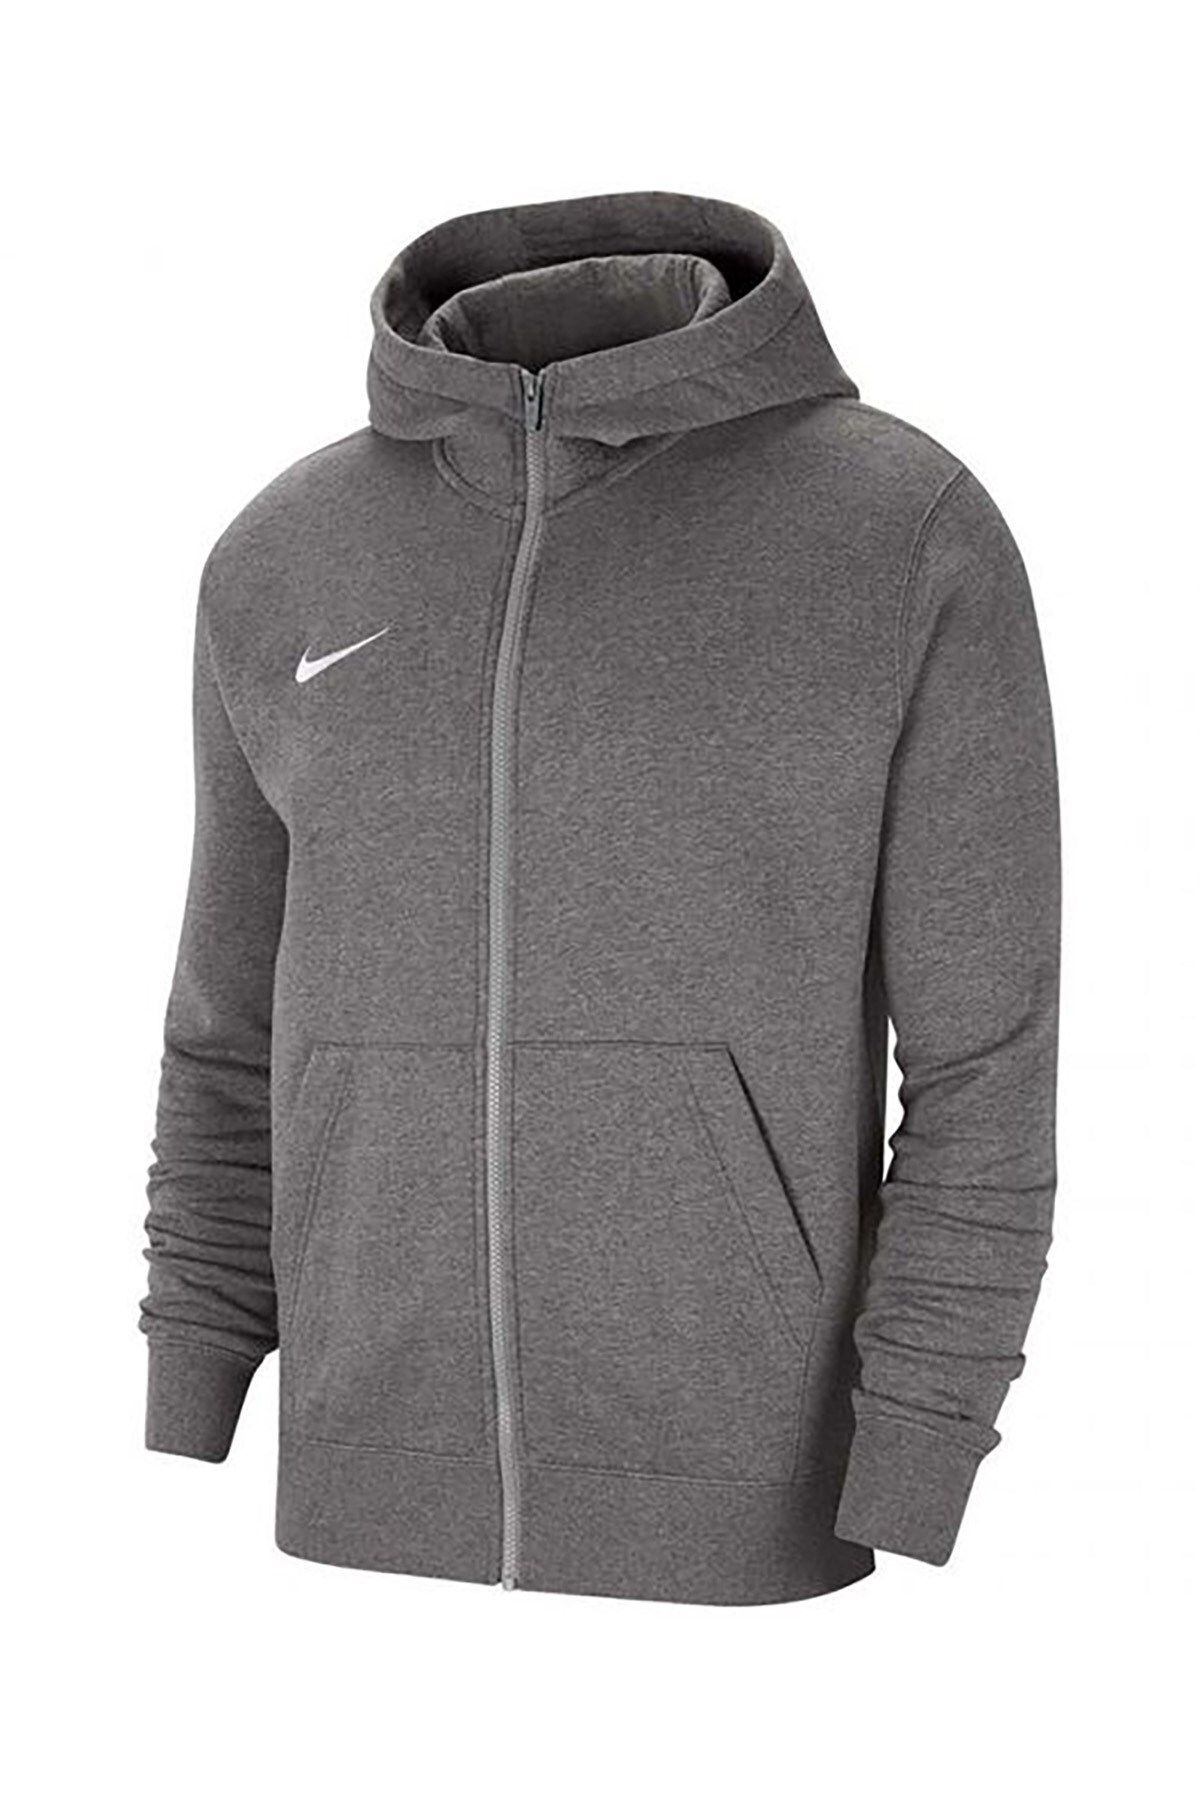 Nike Park 20 Fleece Cw6891-071 Çocuk Sweatshirt